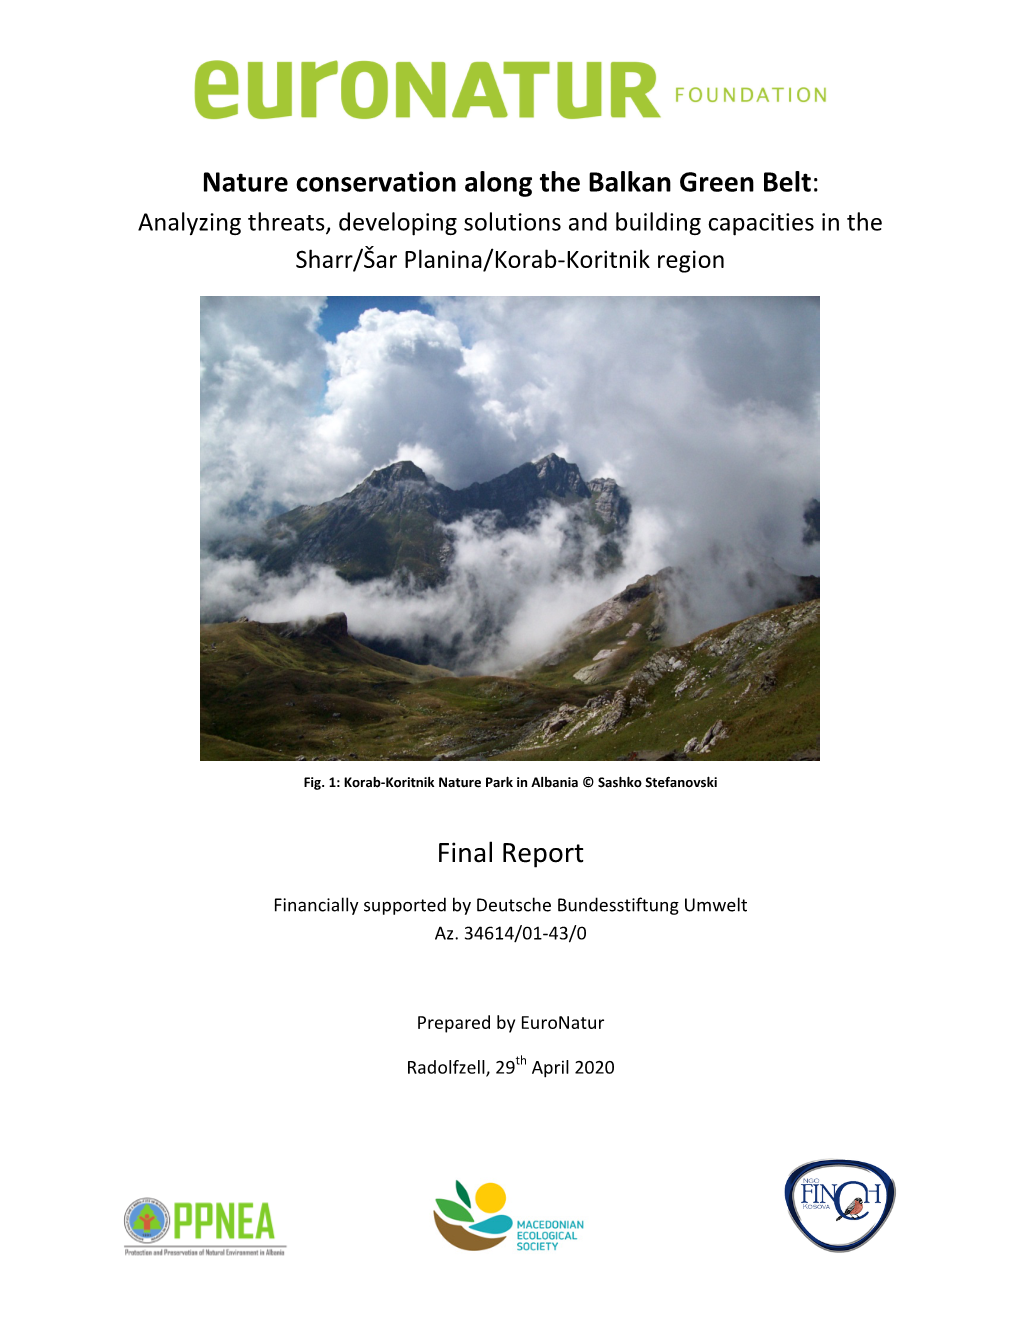 Nature Conservation Along the Balkan Green Belt: Analyzing Threats, Developing Solutions and Building Capacities in the Sharr/Šar Planina/Korab-Koritnik Region